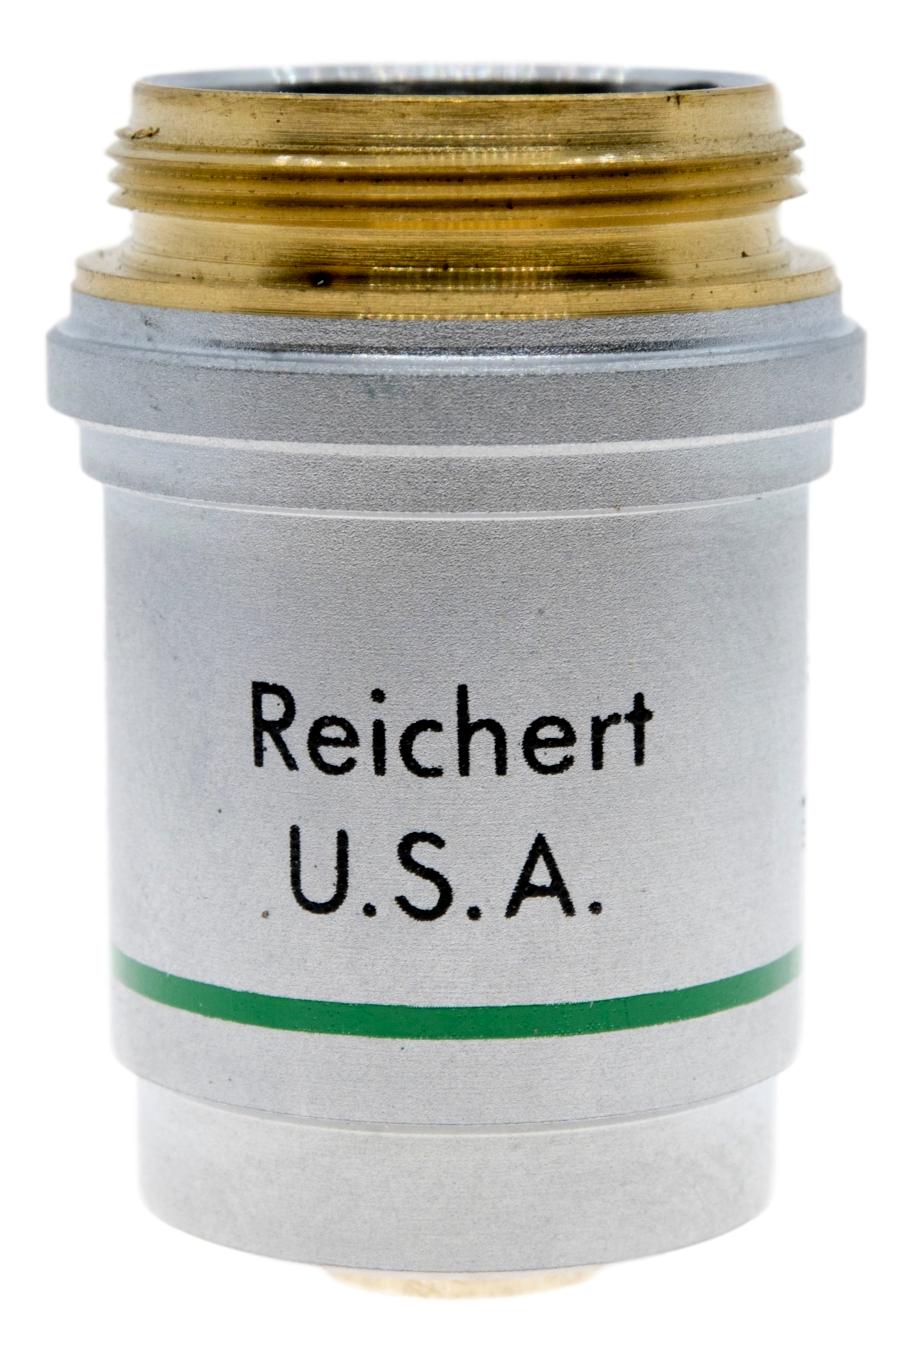 Reichert 10x Plan Achro Infinity Corrected Objective    Catalog #:  1127